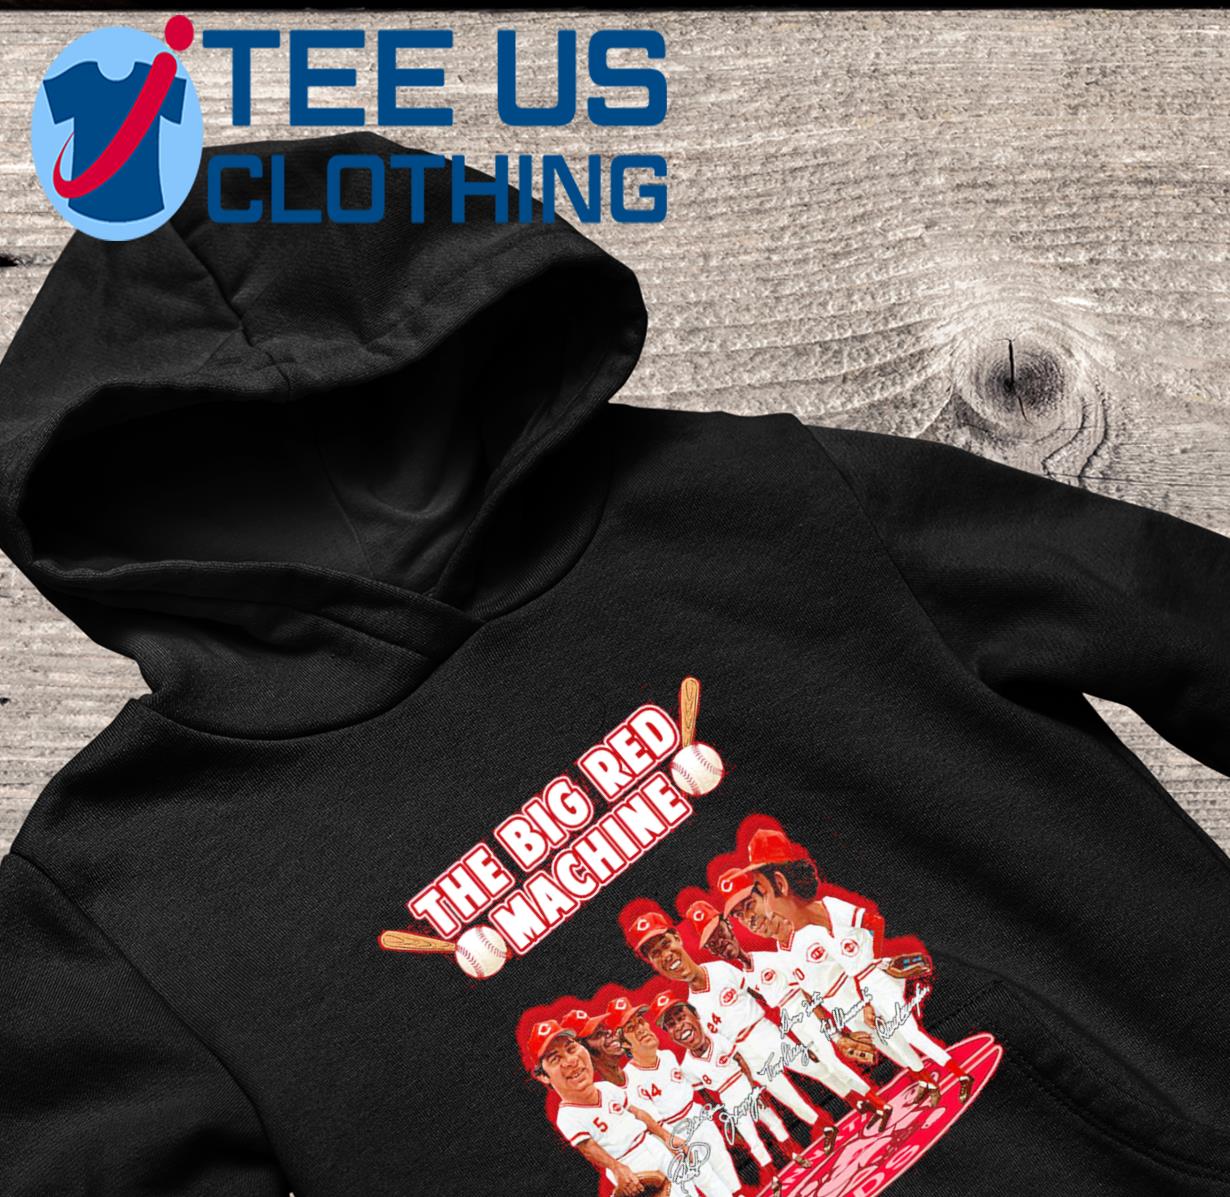 Cincinnati Reds the big red machine shirt - Trend T Shirt Store Online